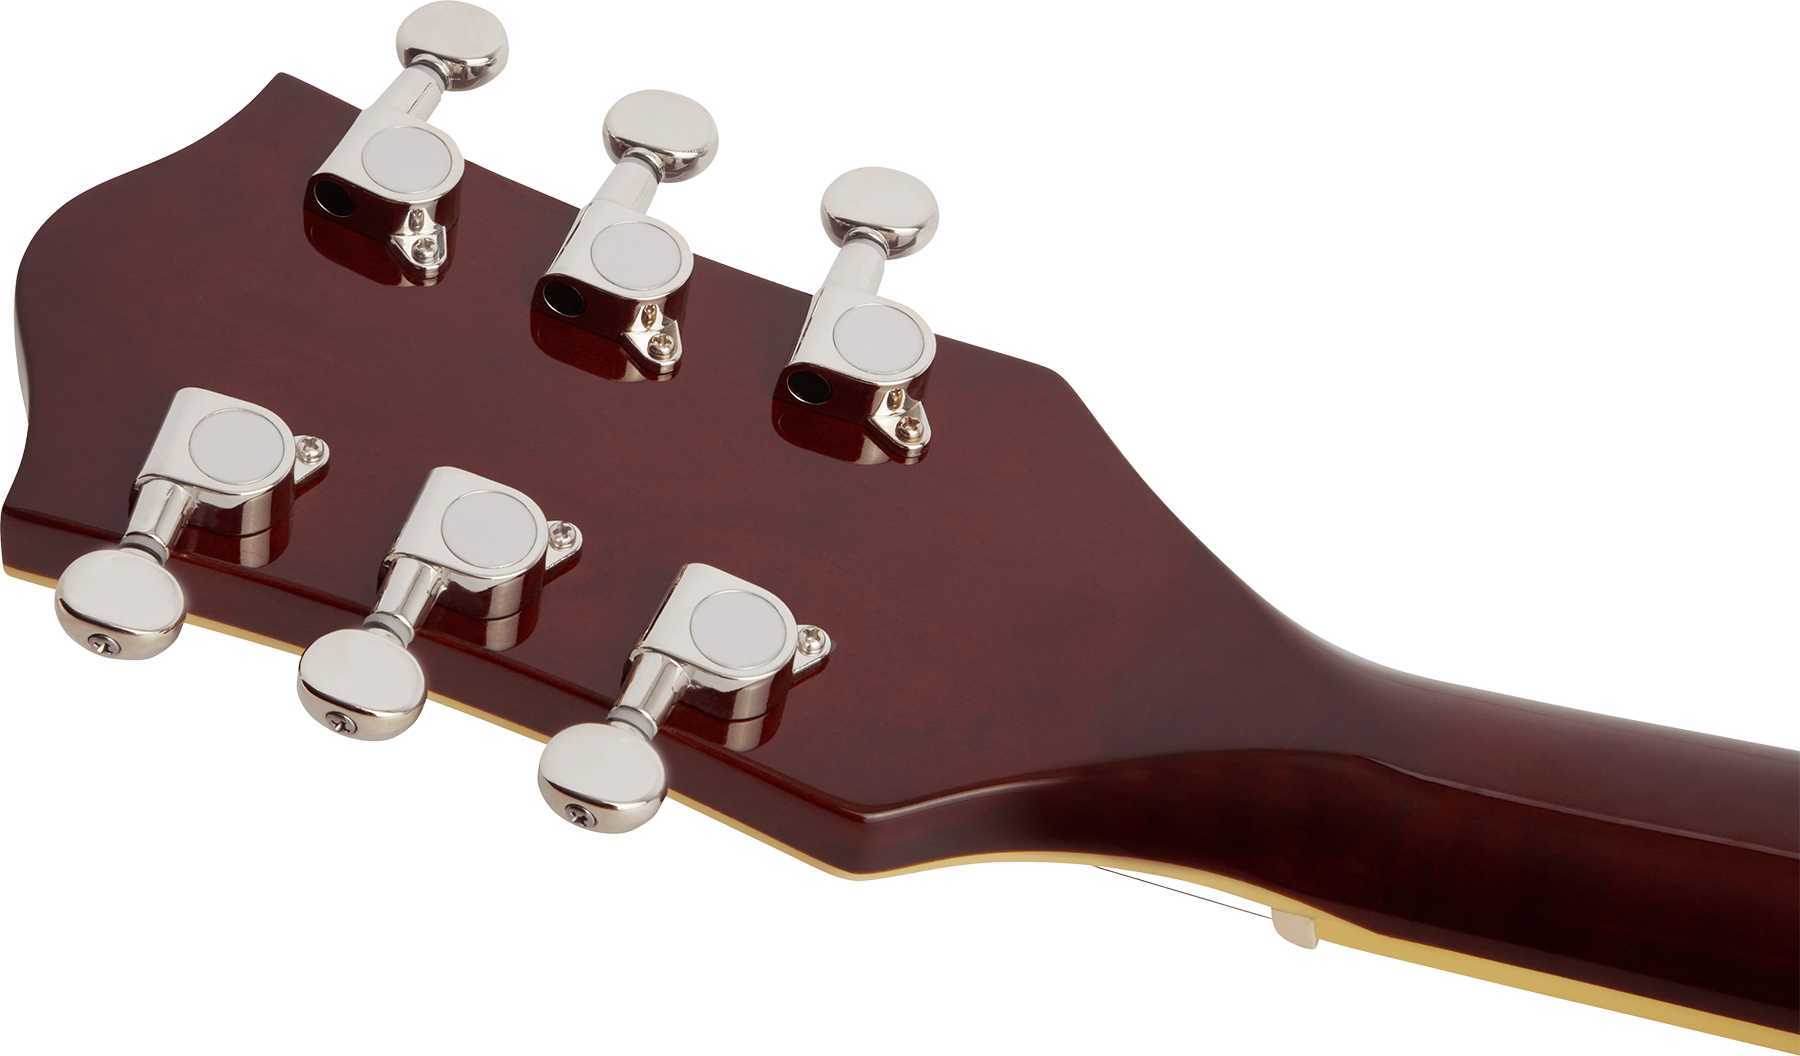 Gretsch G5622 Center Bloc Double Cut V-stoptail Electromatic Hh Ht Lau - Aged Walnut - Semi-Hollow E-Gitarre - Variation 3